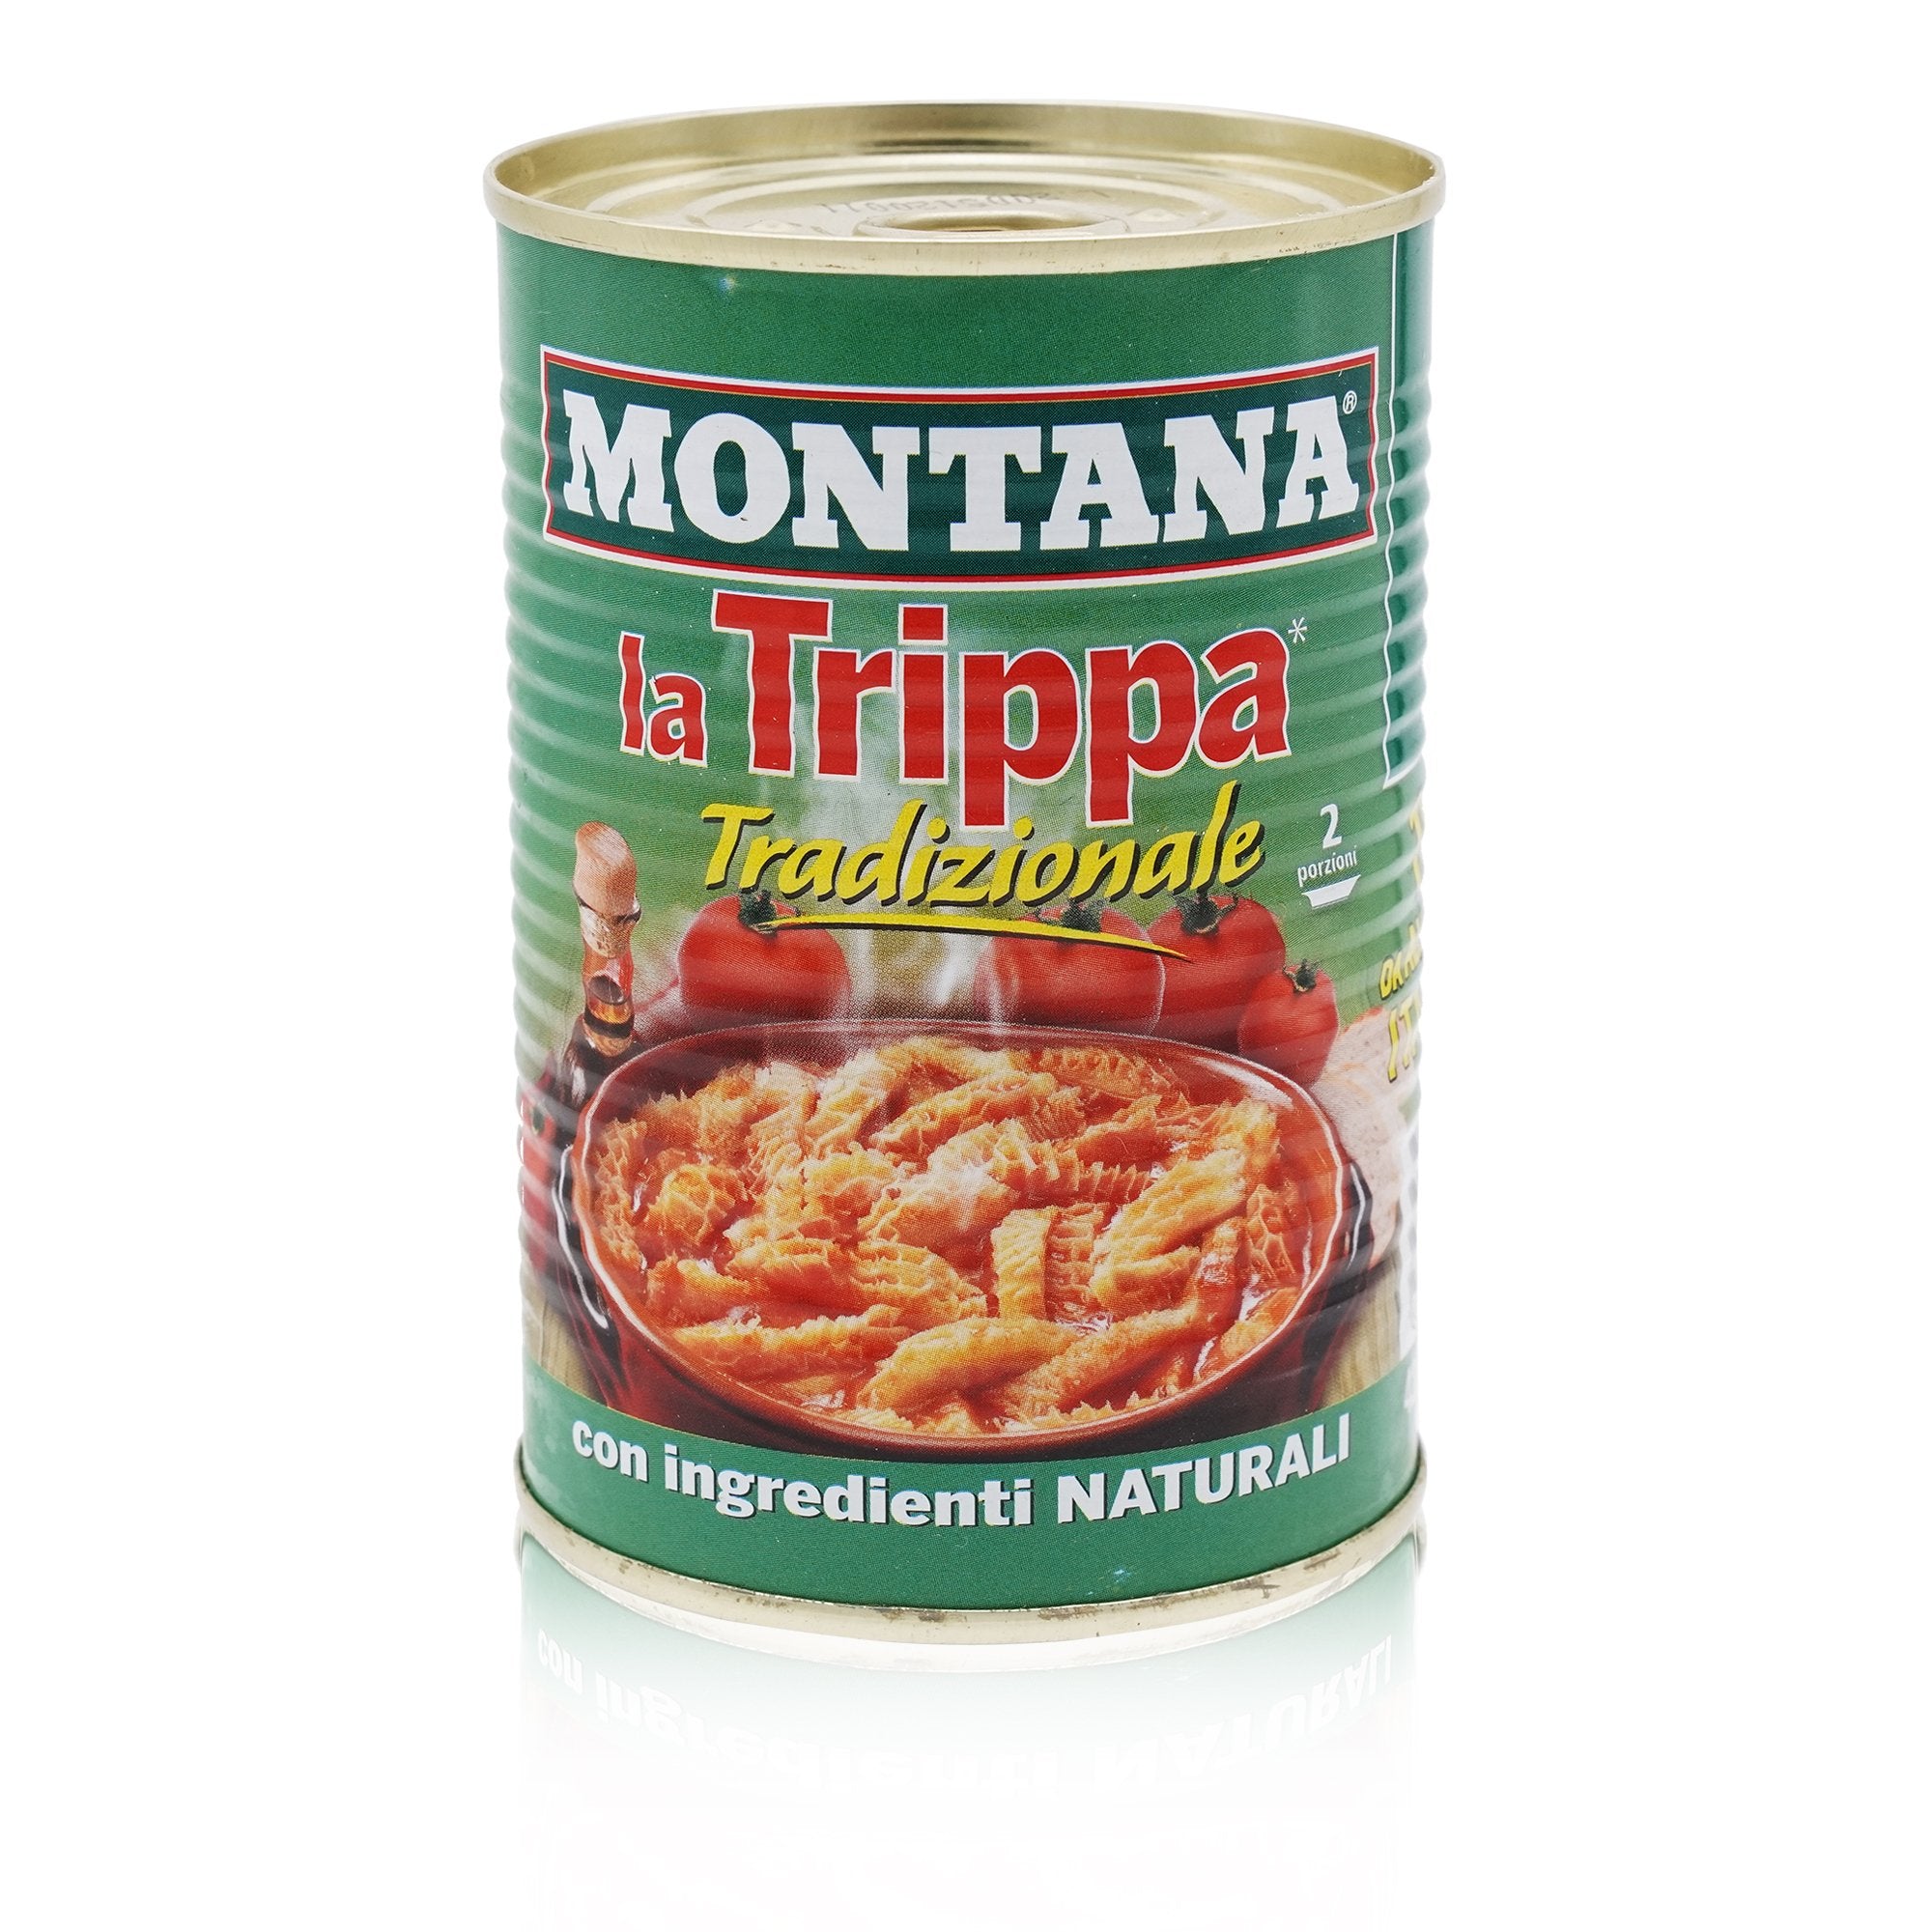 MONTANA Trippa tradizionale – Kutteln Traditional - 0,420kg